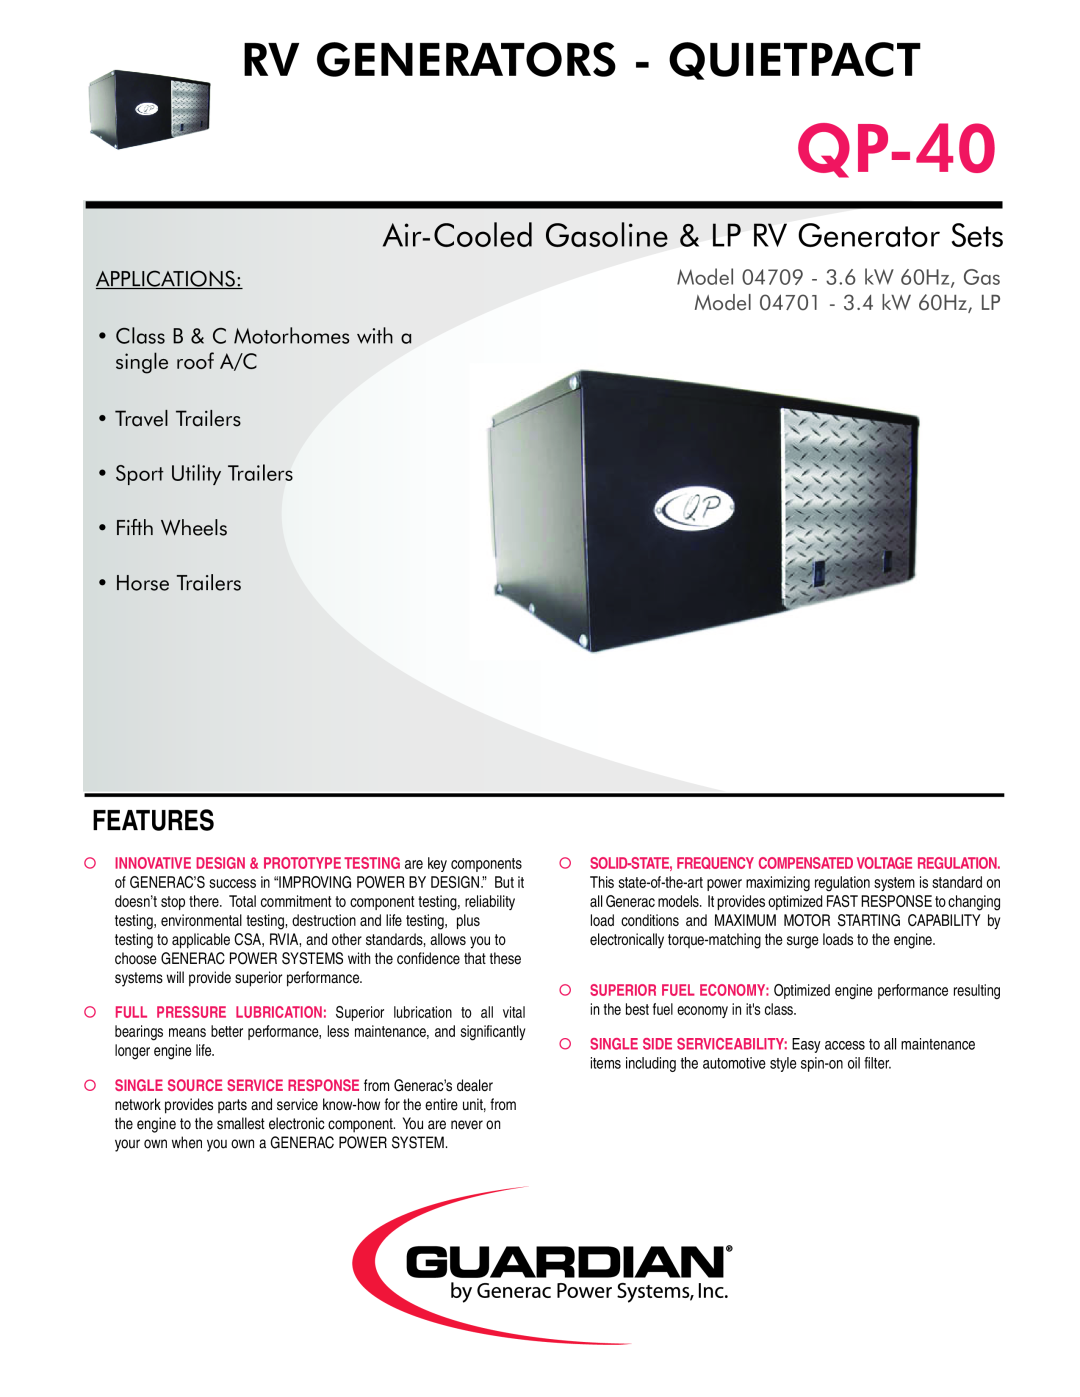 Guardian Technologies QP-40 manual Features, Rv Generators - Quietpact, Air-CooledGasoline & LP RV Generator Sets 